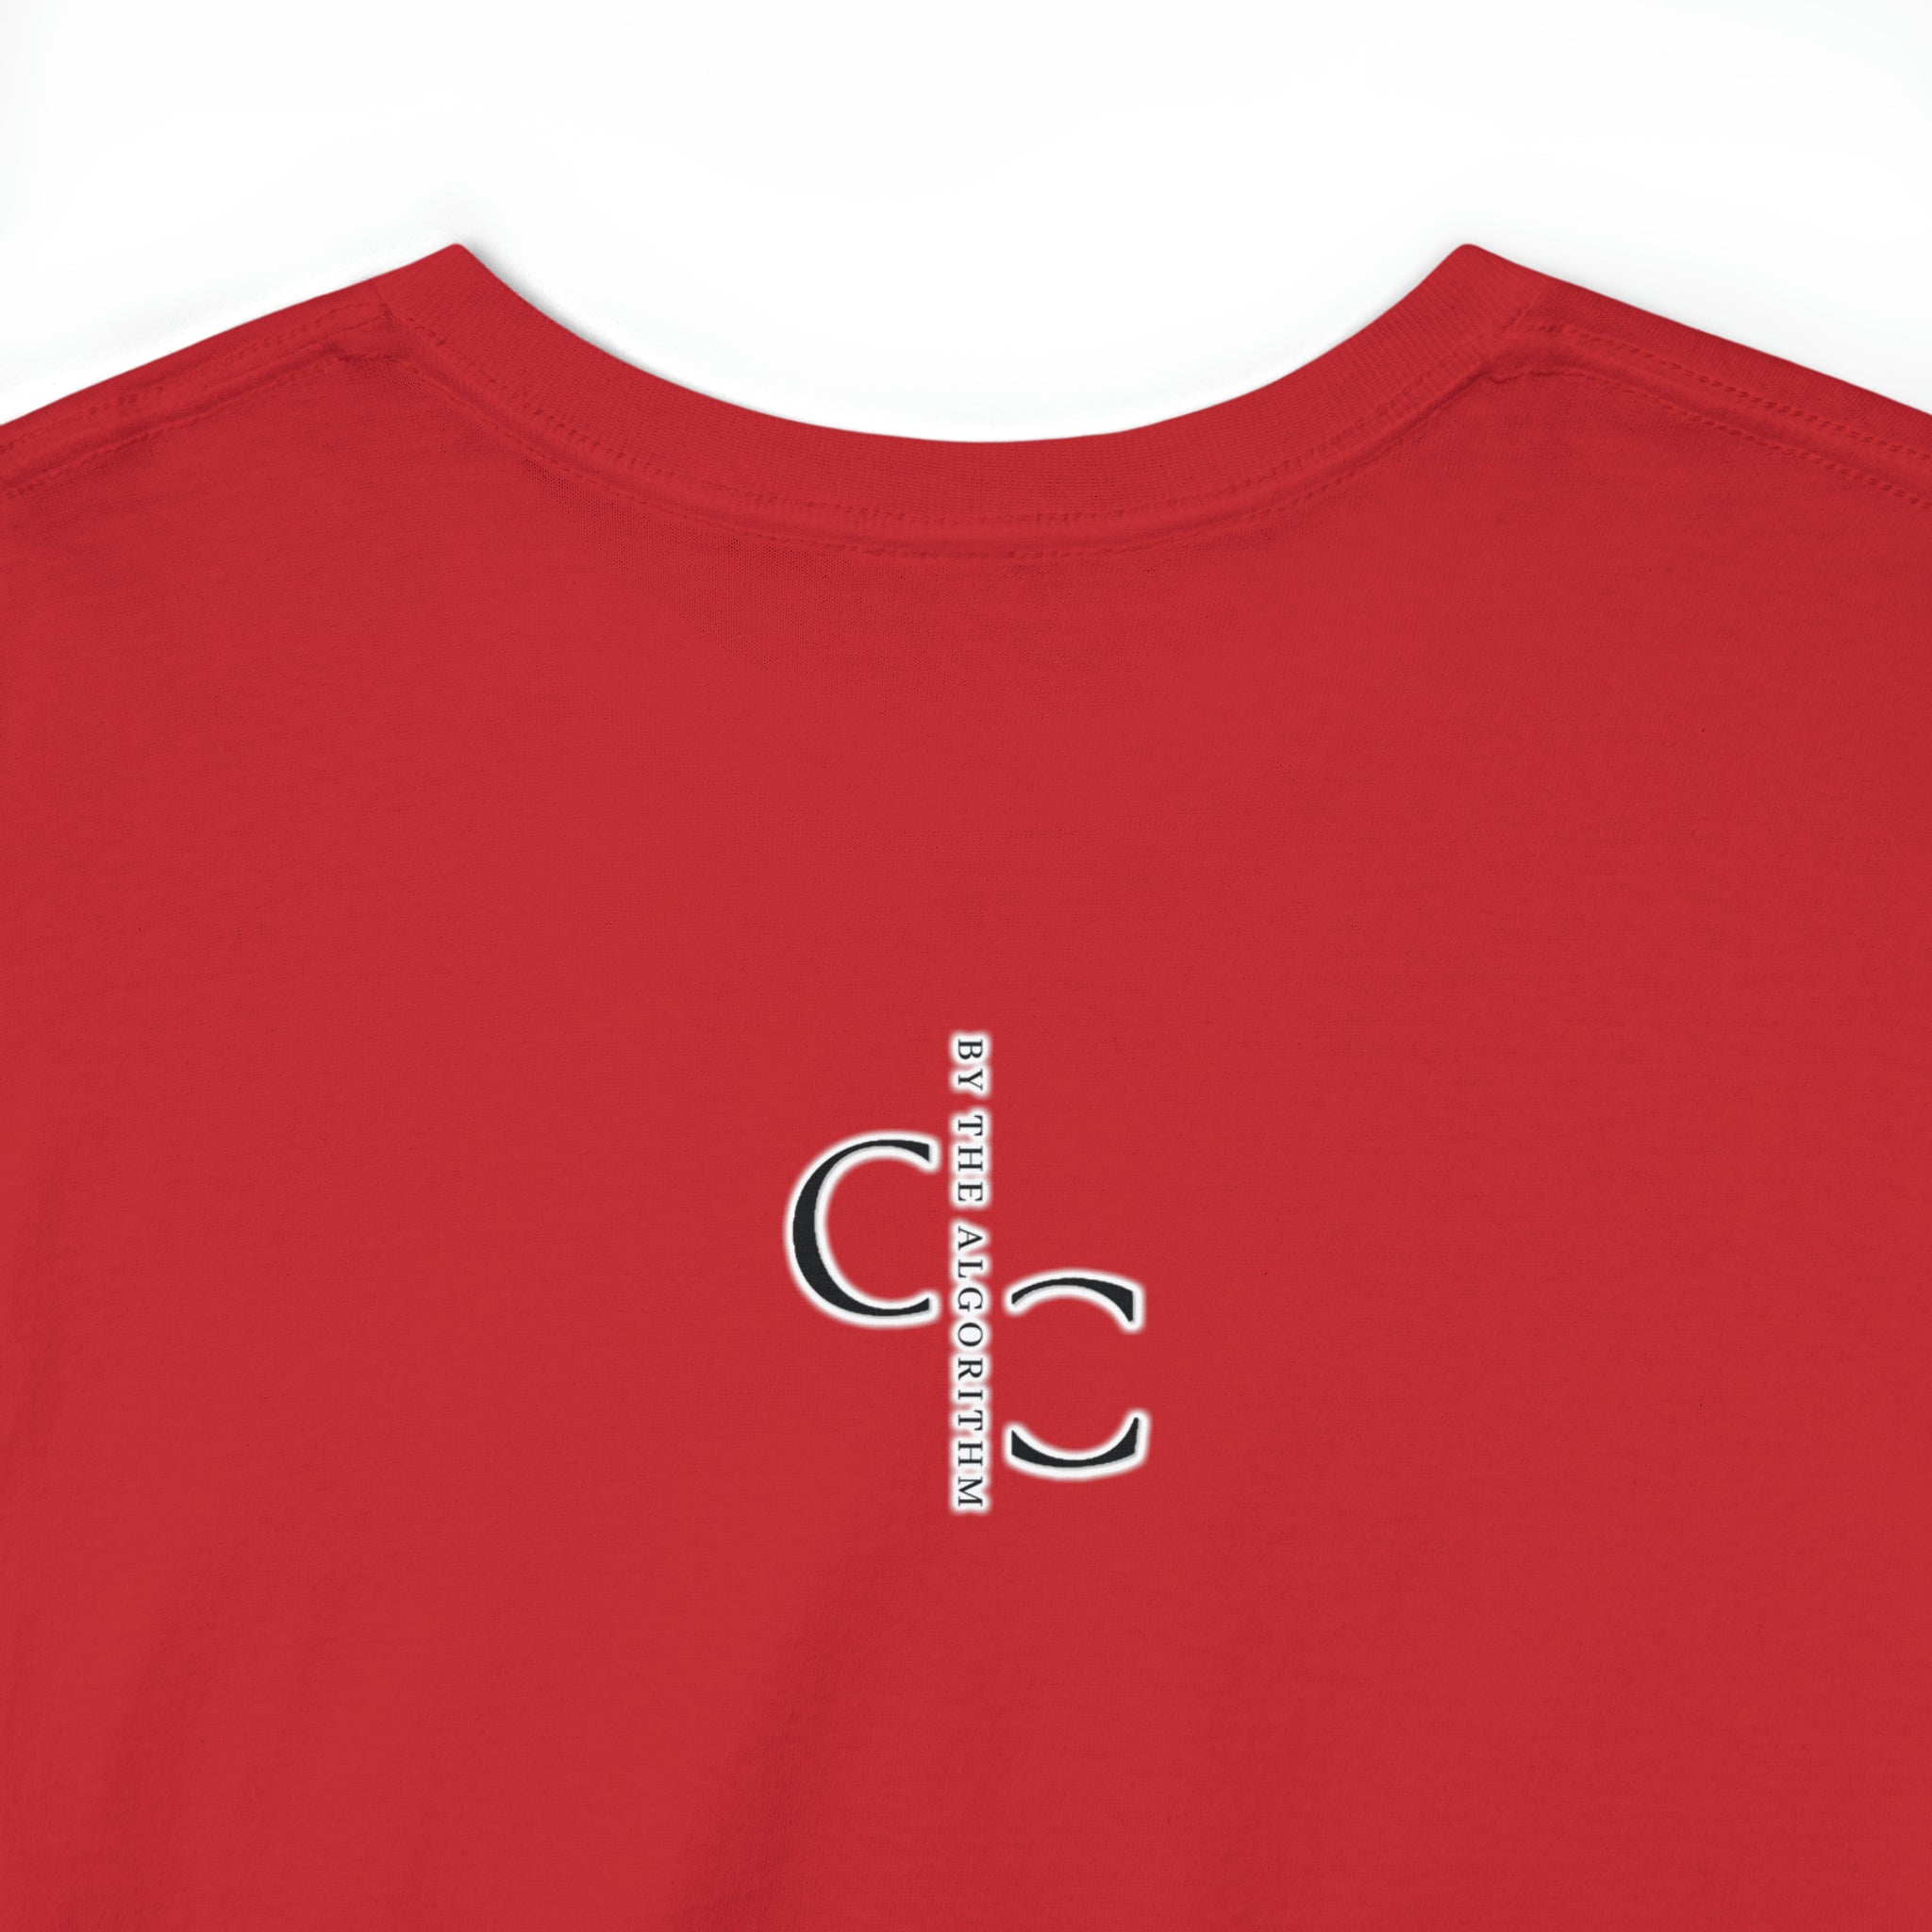 Zalima Chai Pila De T-Shirt Designs by C&C